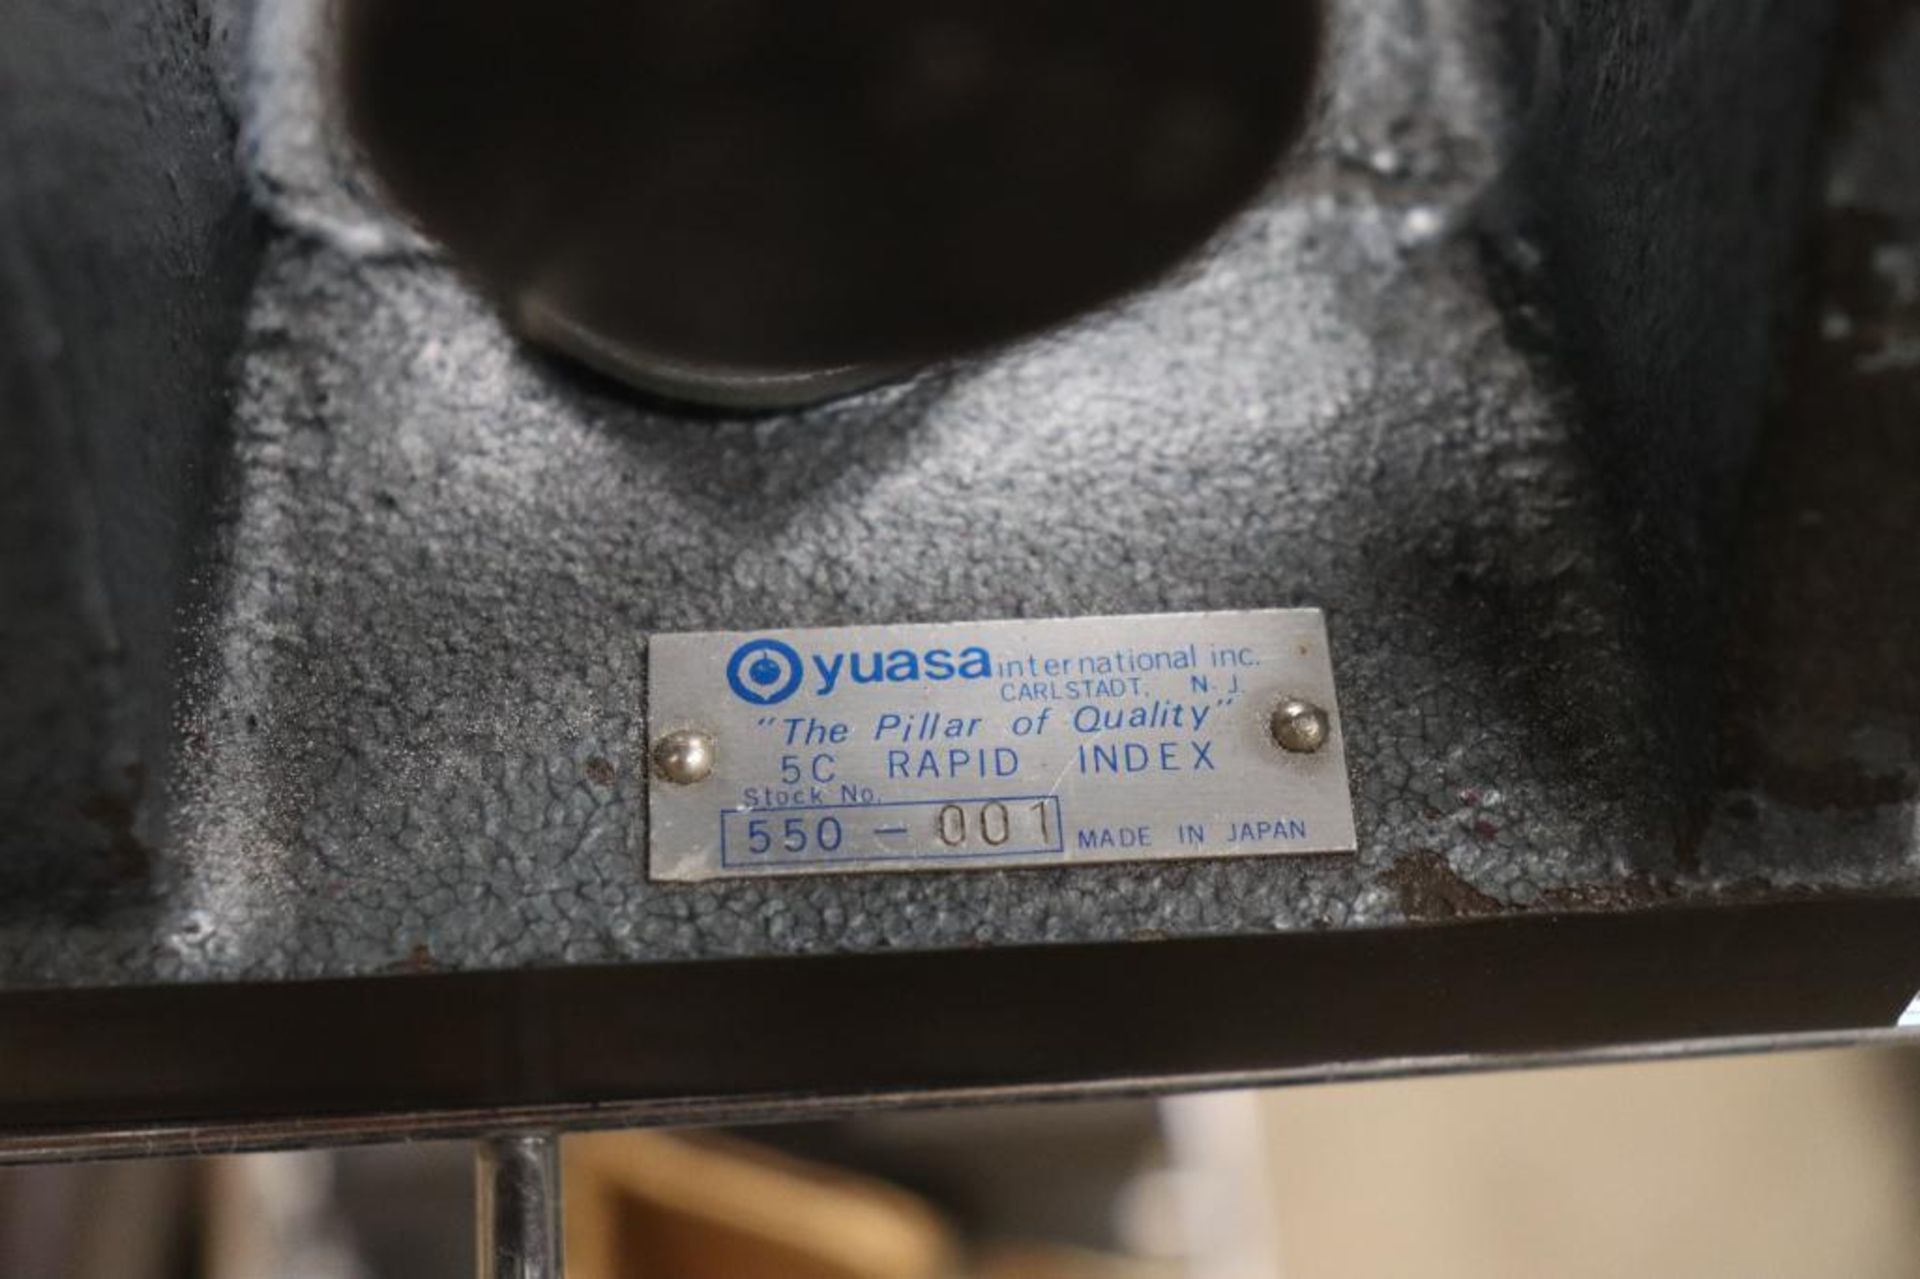 Yuasa 550-001 Radius dresser - Image 4 of 4